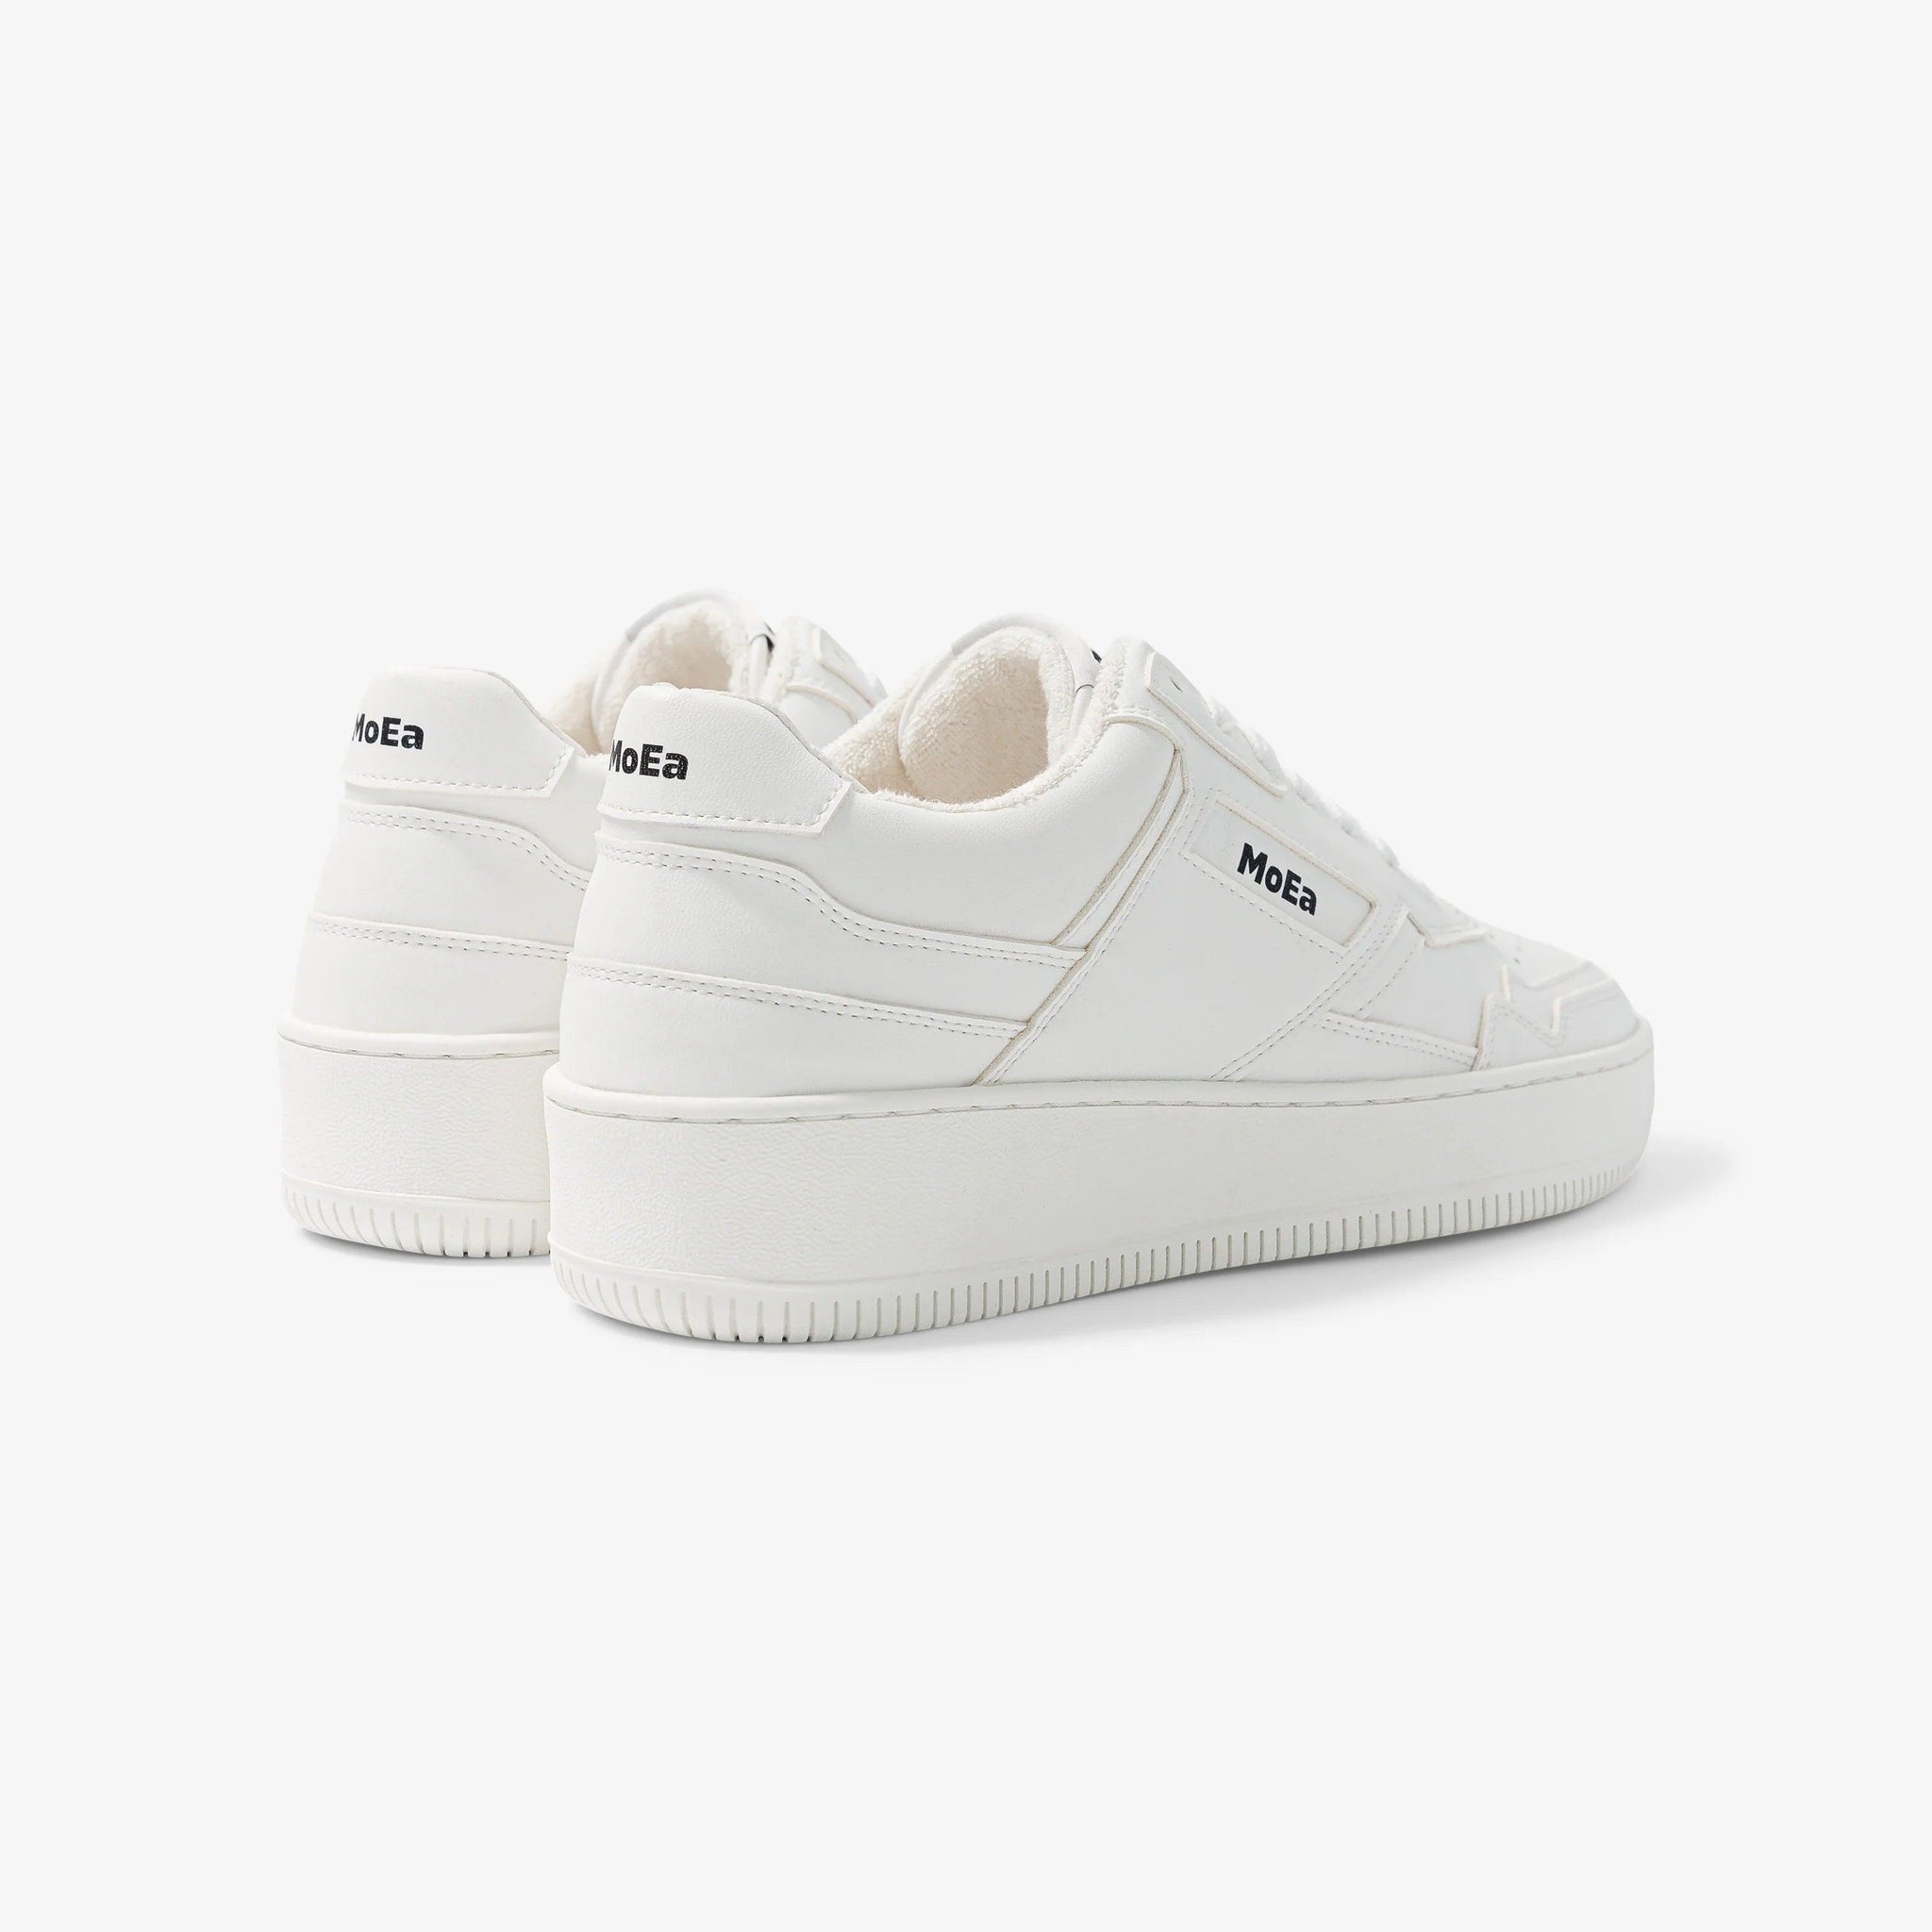 MoEa Gen1 All White sneaker - MADE THE EDIT